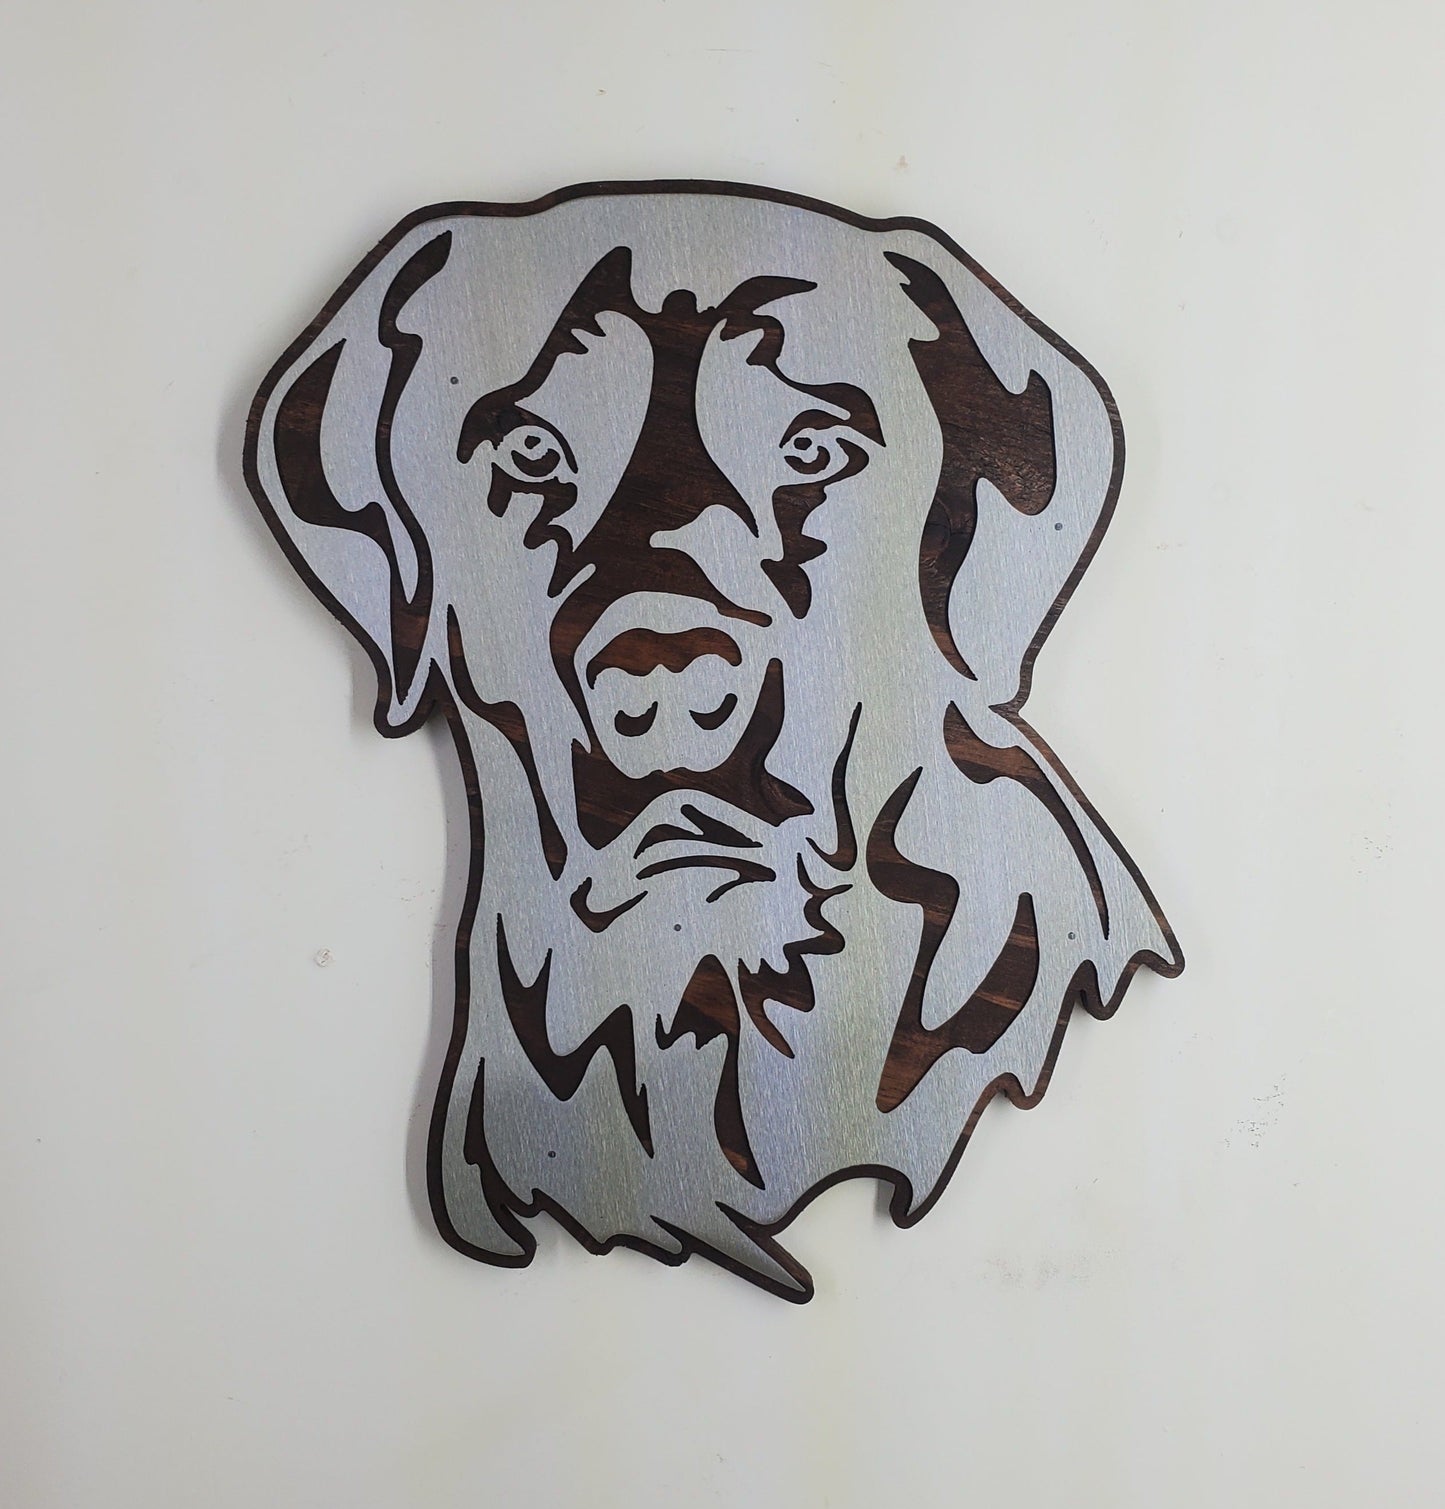 Black Lab Dog wall décor metal art on wood    Made in USA   dog gift Labrador Retriever